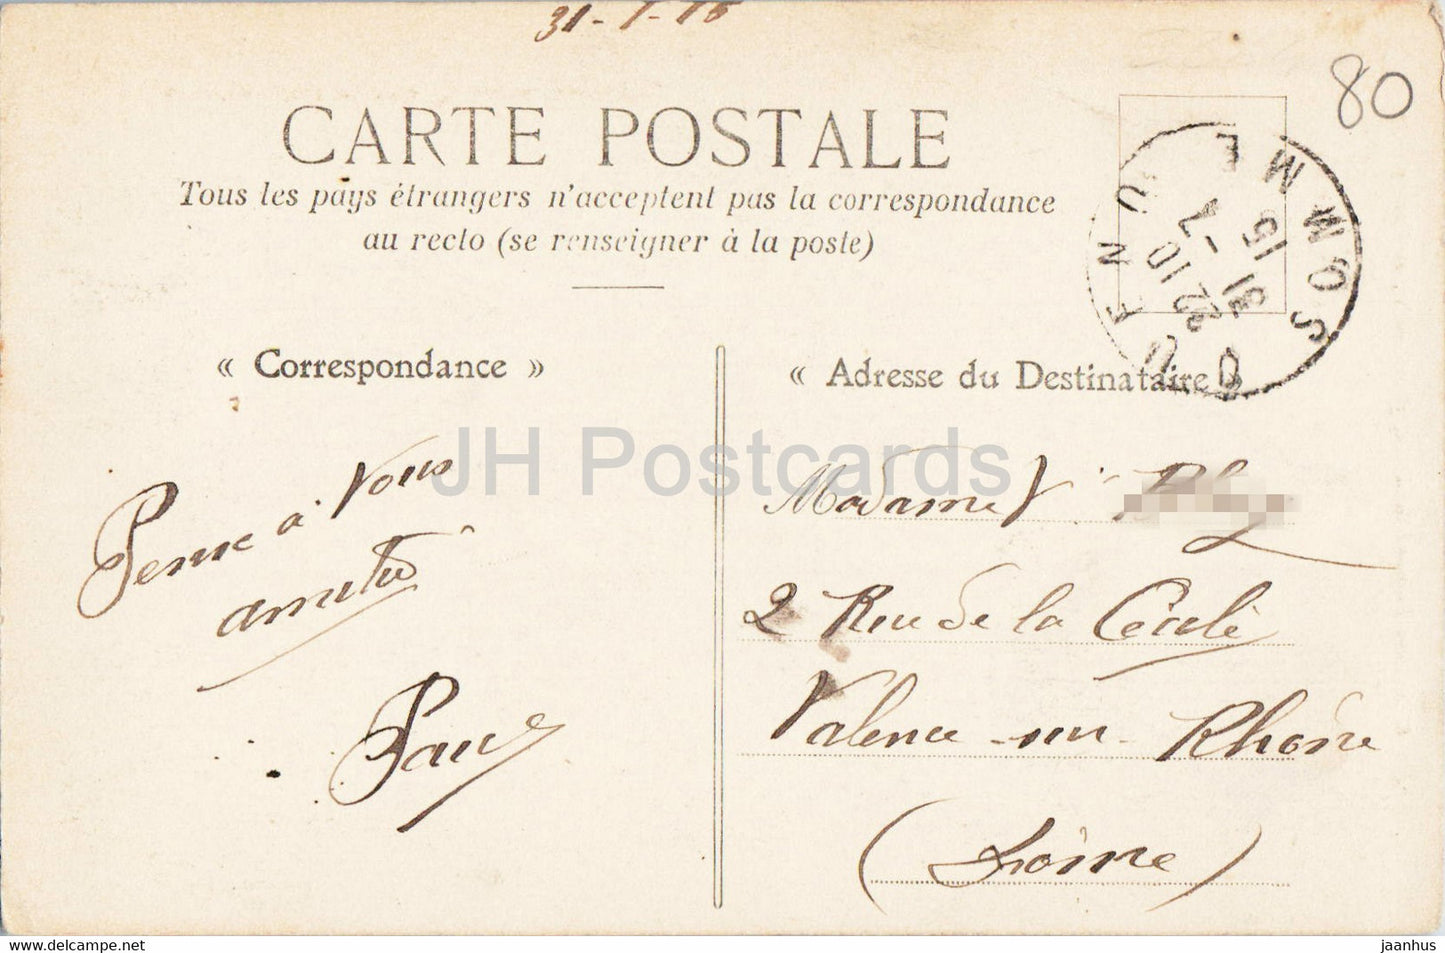 Calvaire entre Quend et Fort Mahon - alte Postkarte - 1915 - Frankreich - gebraucht